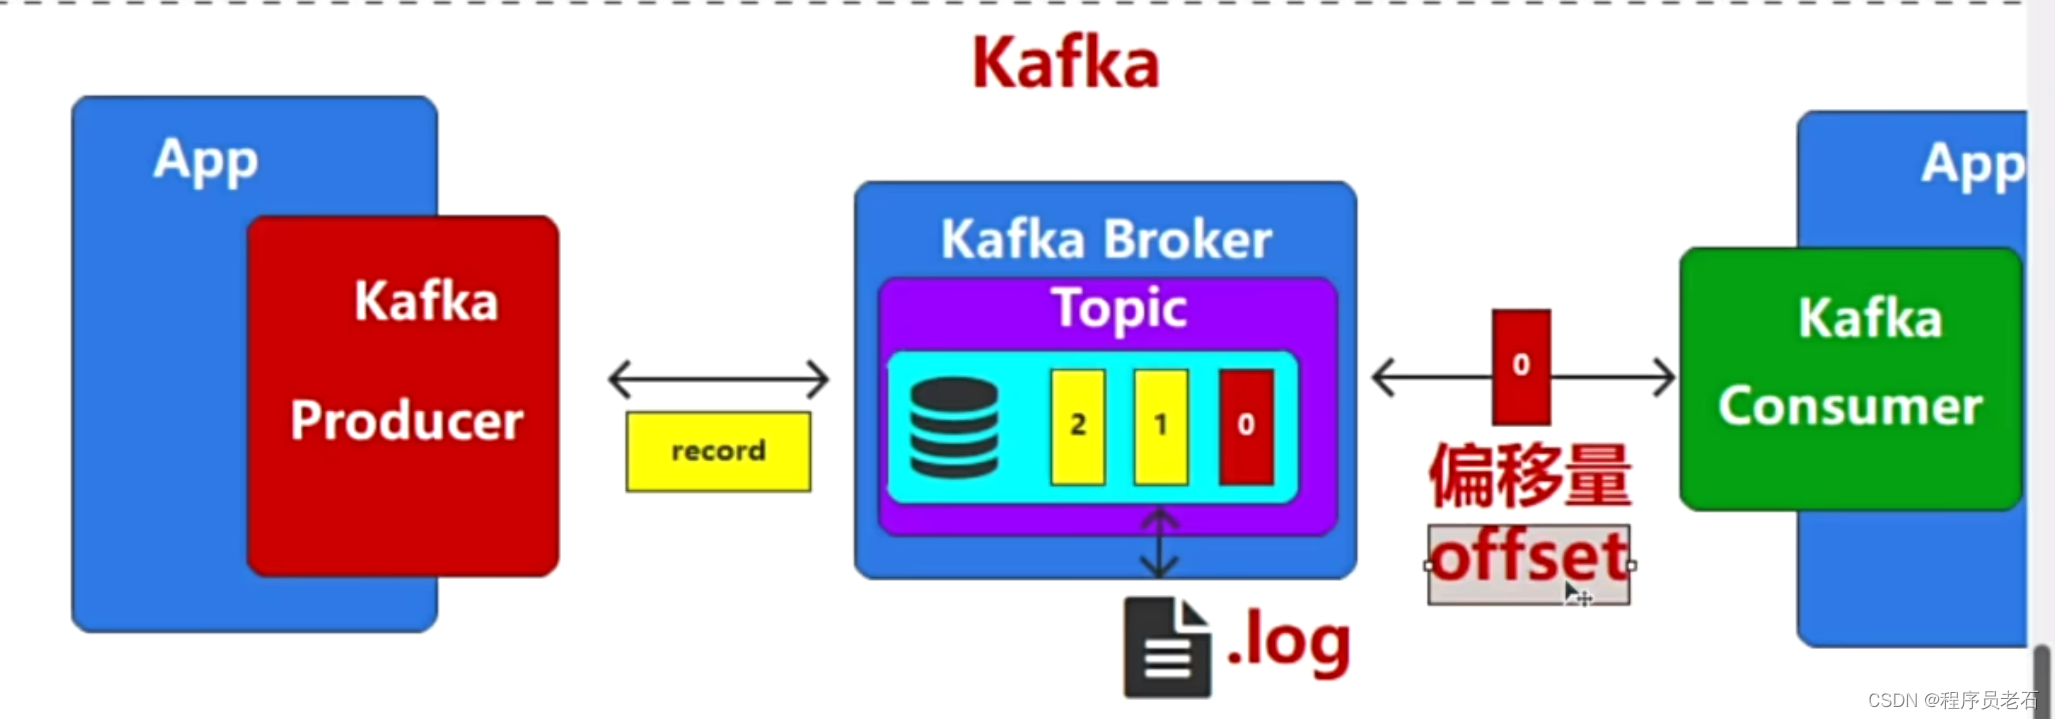 kafka学习1 - 线程、进程消息通信方式、JMS模型、Kafka原理图